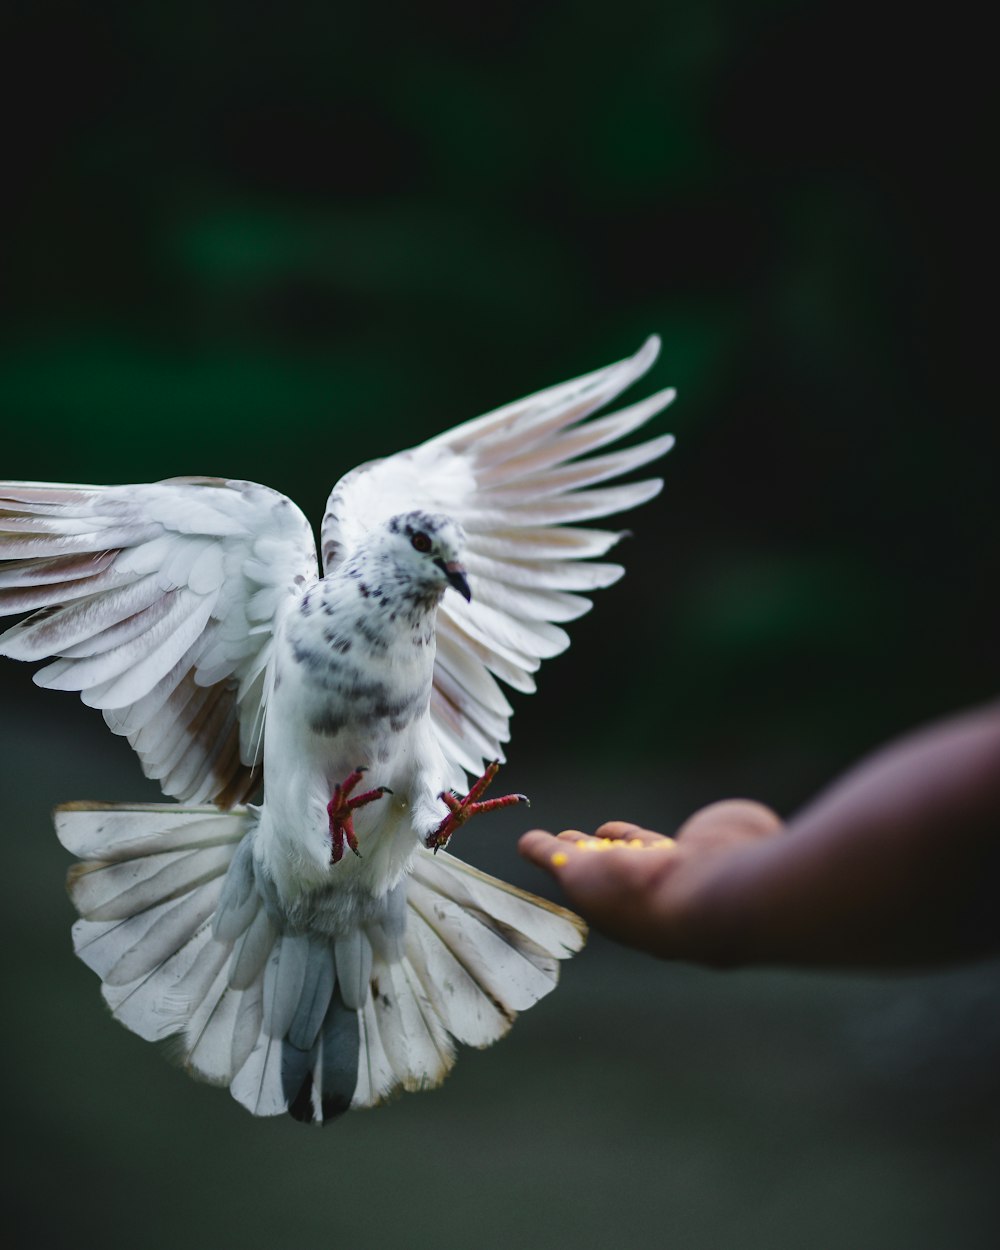 rock dove flying beside hand